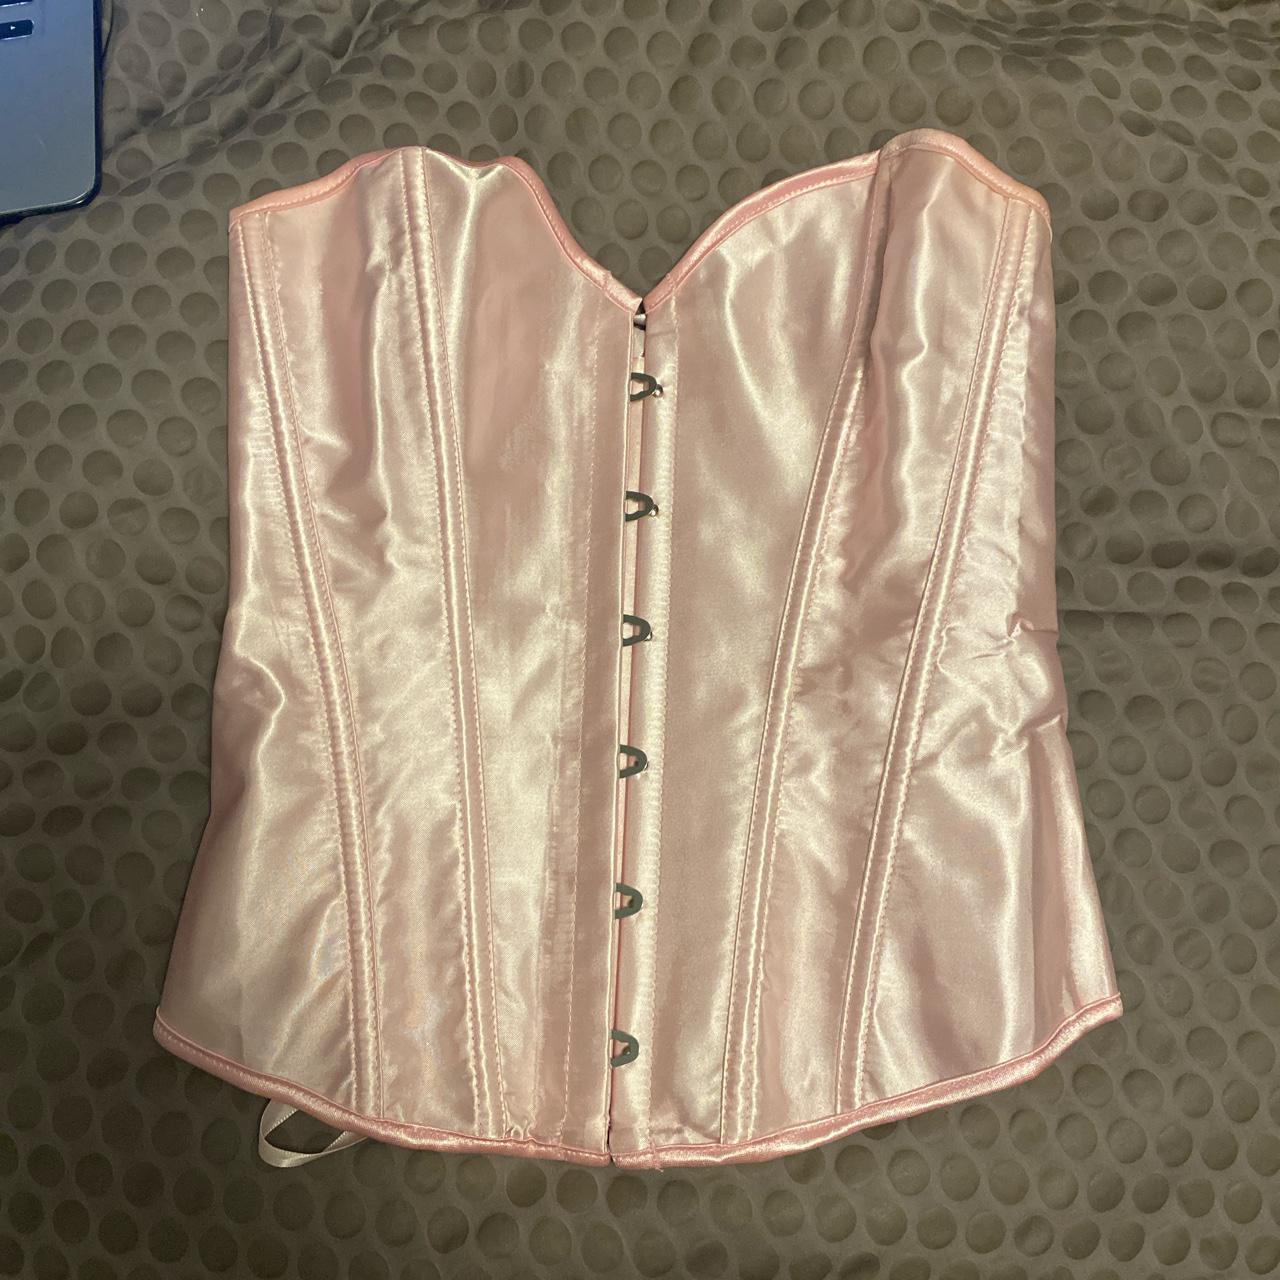 Product Image 1 - Pink satin corset